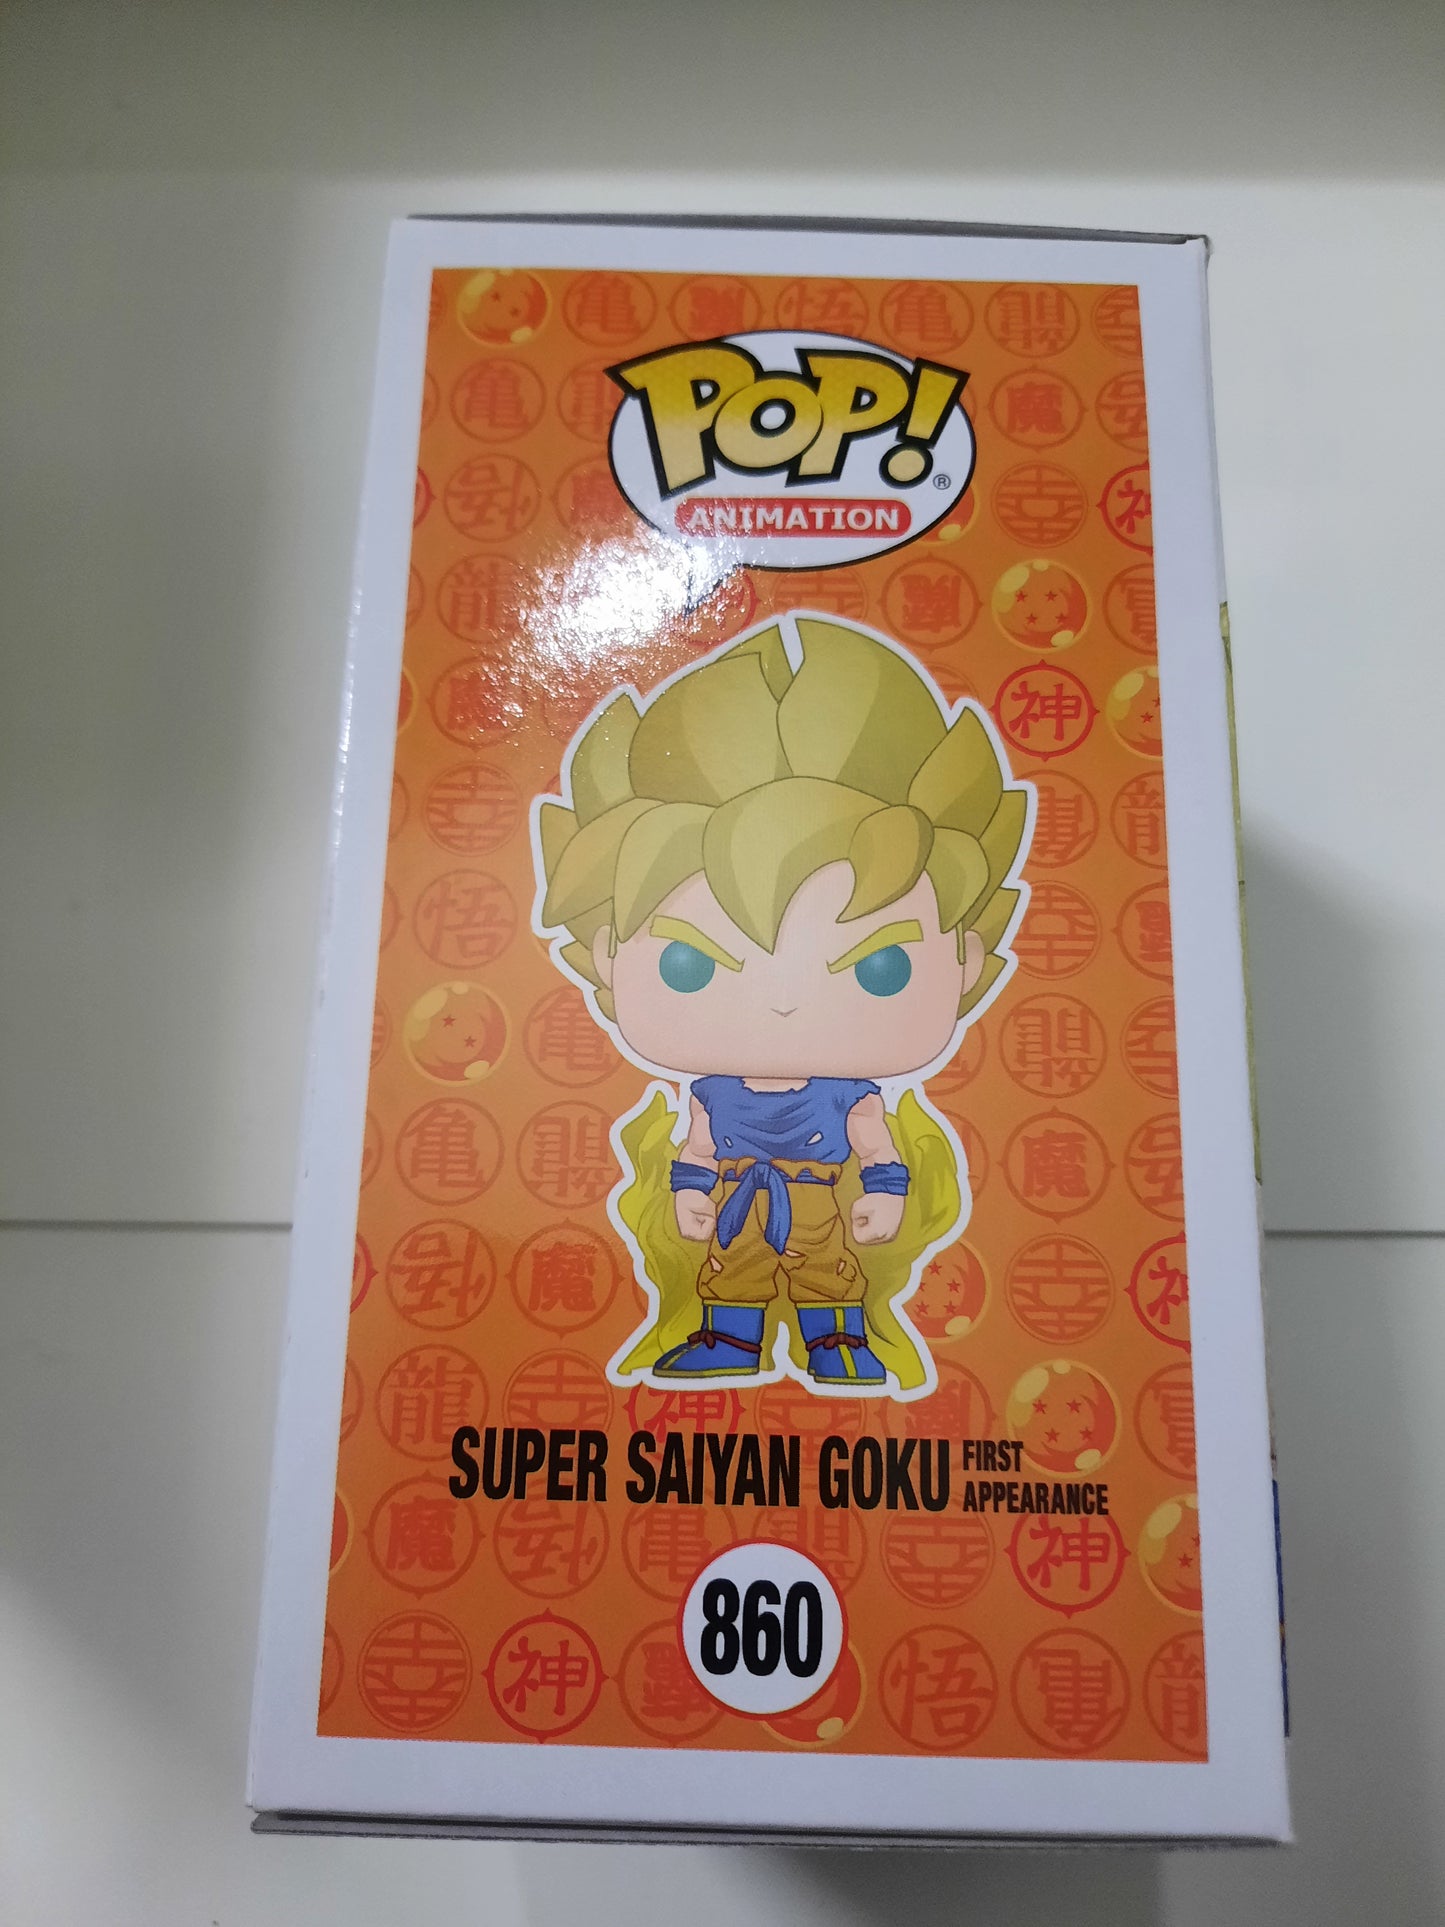 Funko Pop Super Sayan Goku with Appearance 860 - Dragonball Z